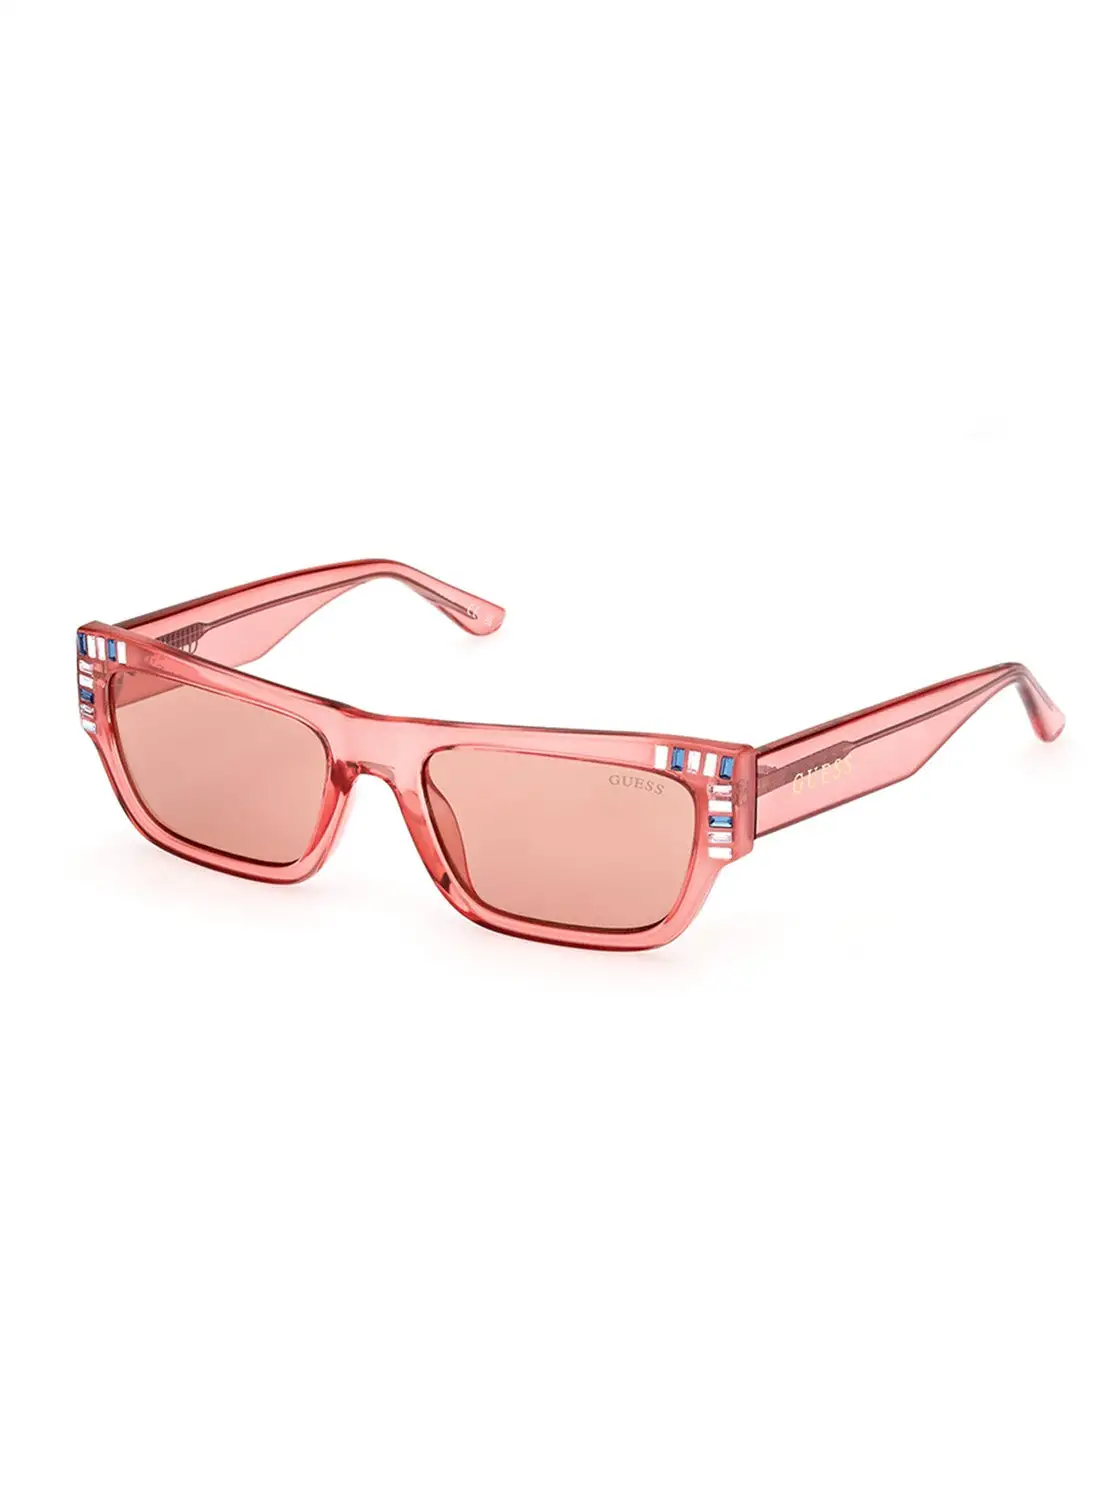 GUESS Women's UV Protection Rectangular Shape Sunglasses - GU790274S53 - Lens Size: 53 Mm